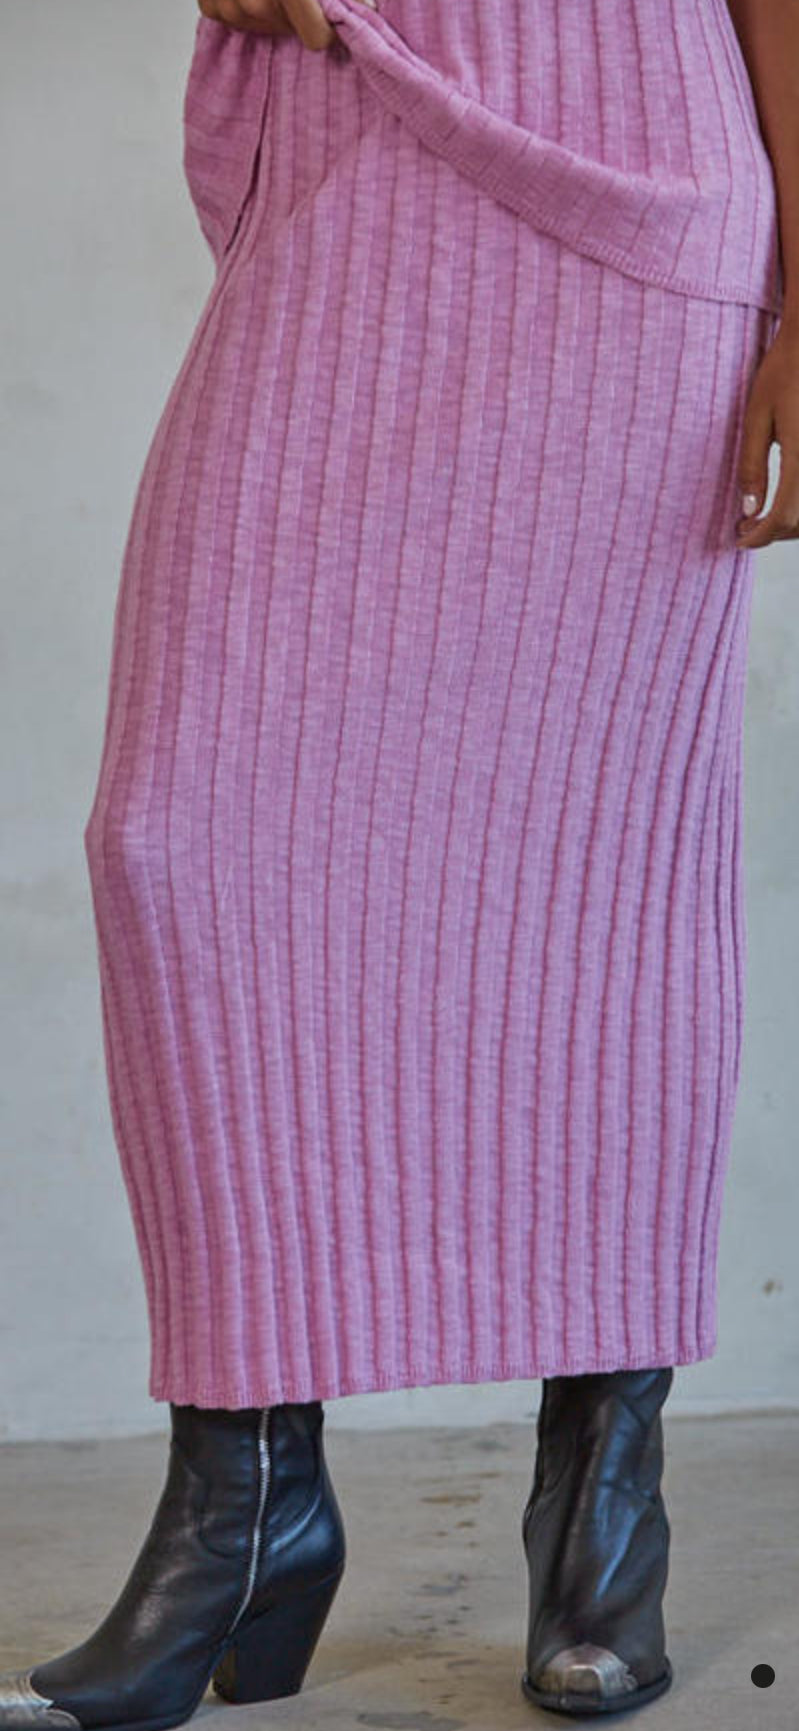 Ribbed Knit Pencil Skirt